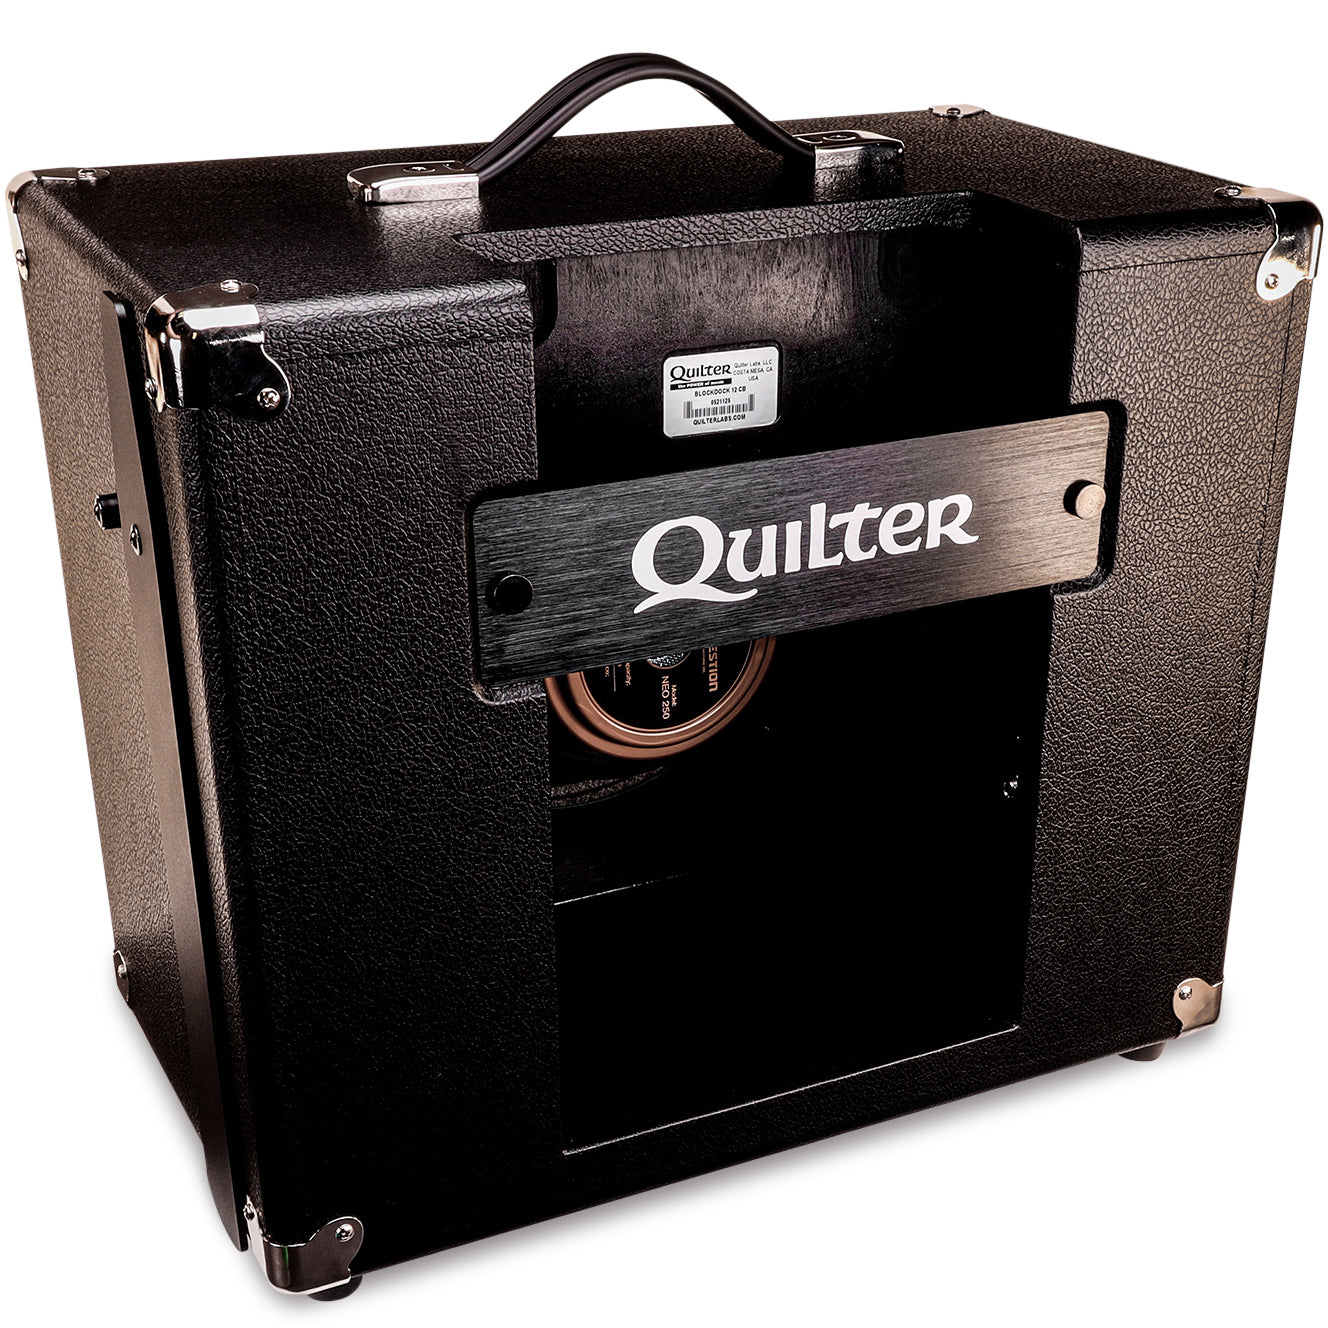 Quilter BlockDock 12HD 300 Watts Cabinet